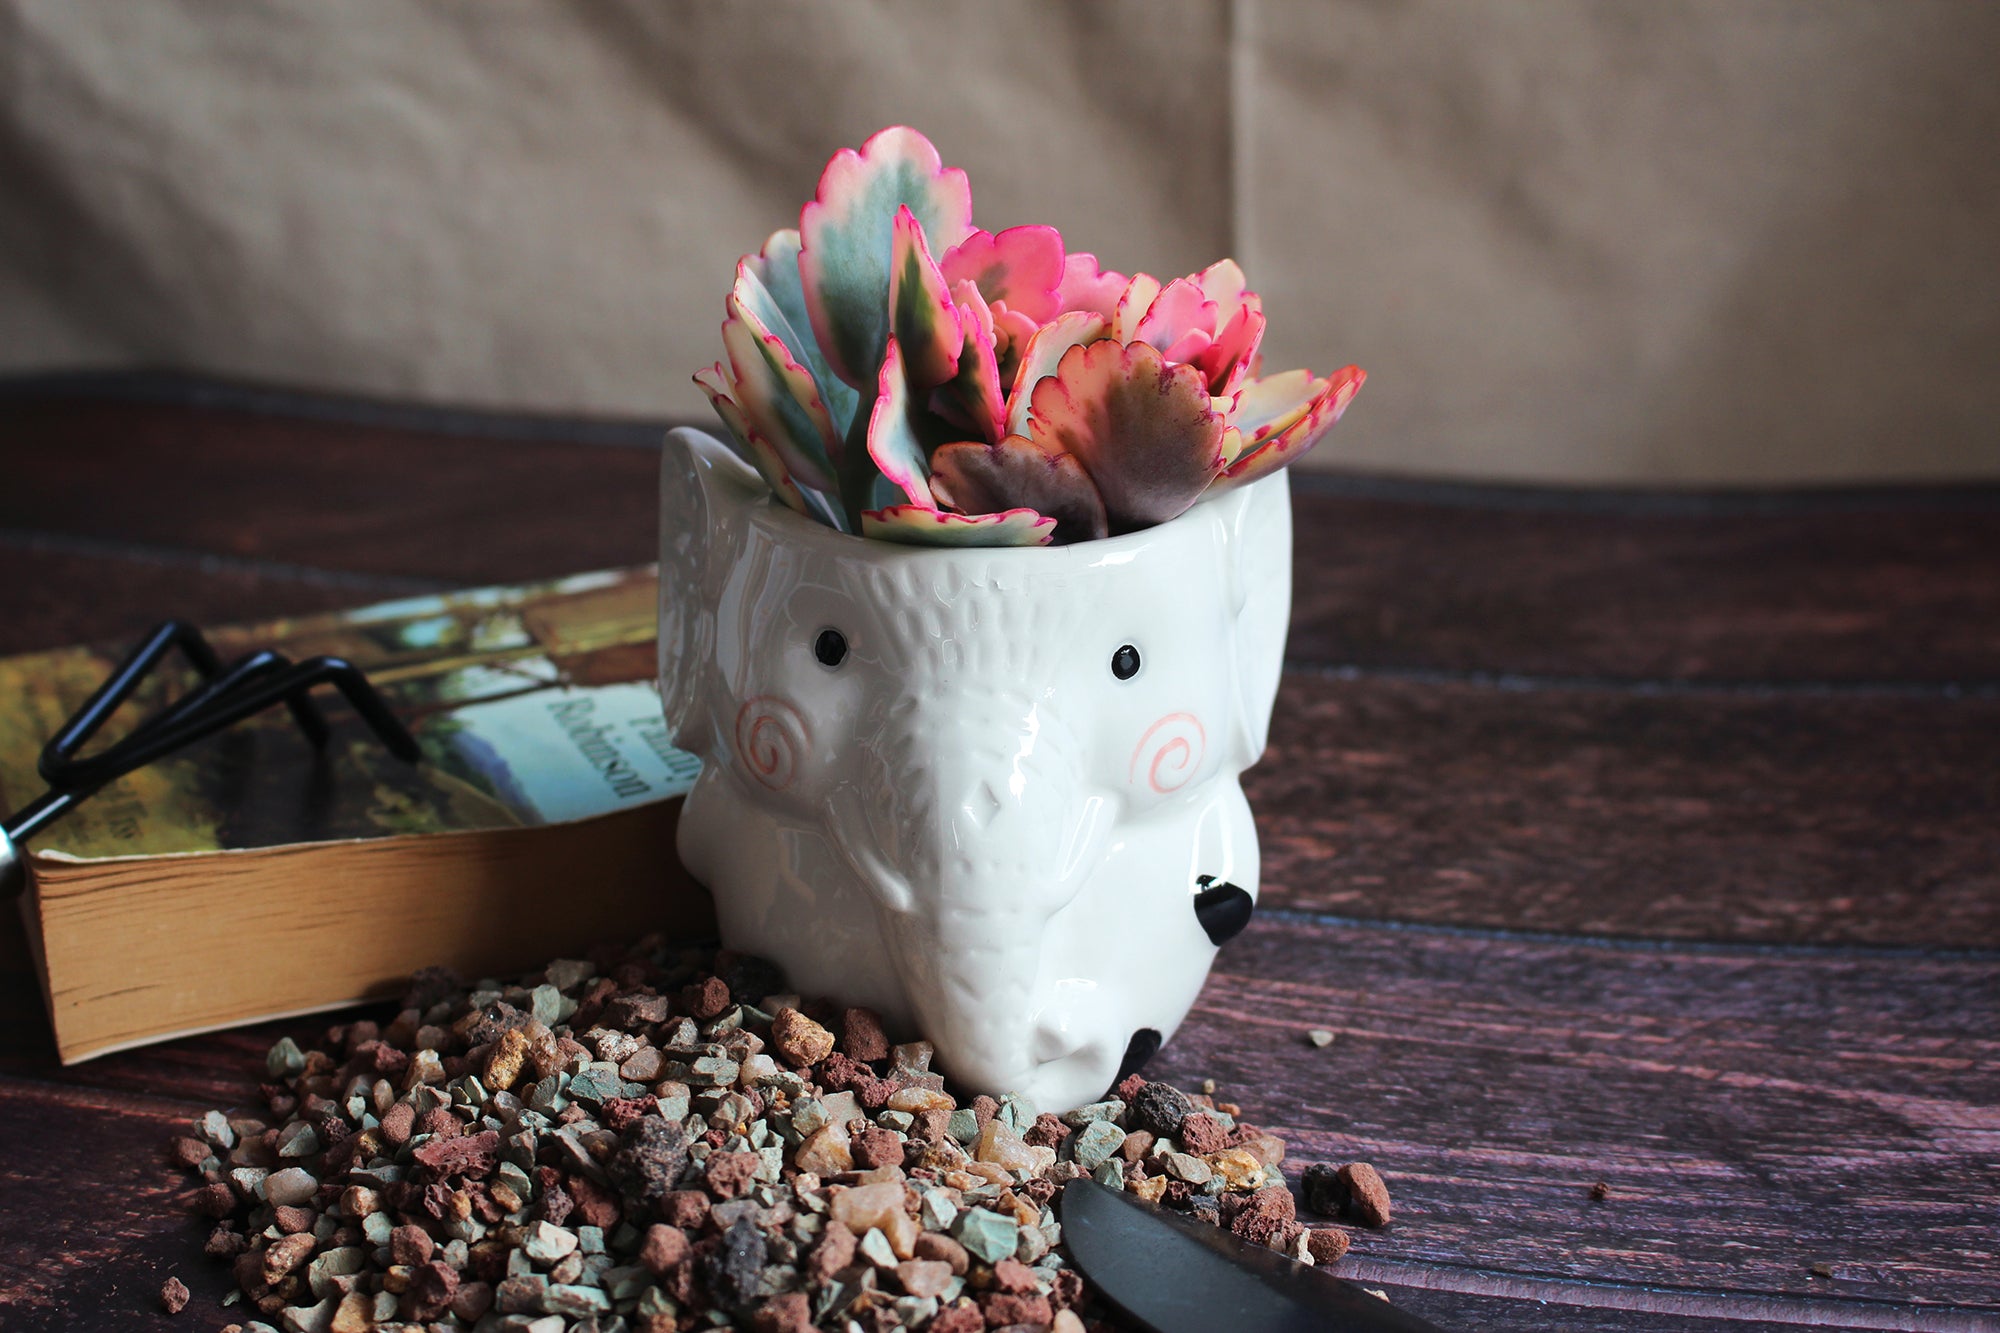 Elephant Succulent Planters 2 Pack Ceramic Flower Pots with Drainage Hole